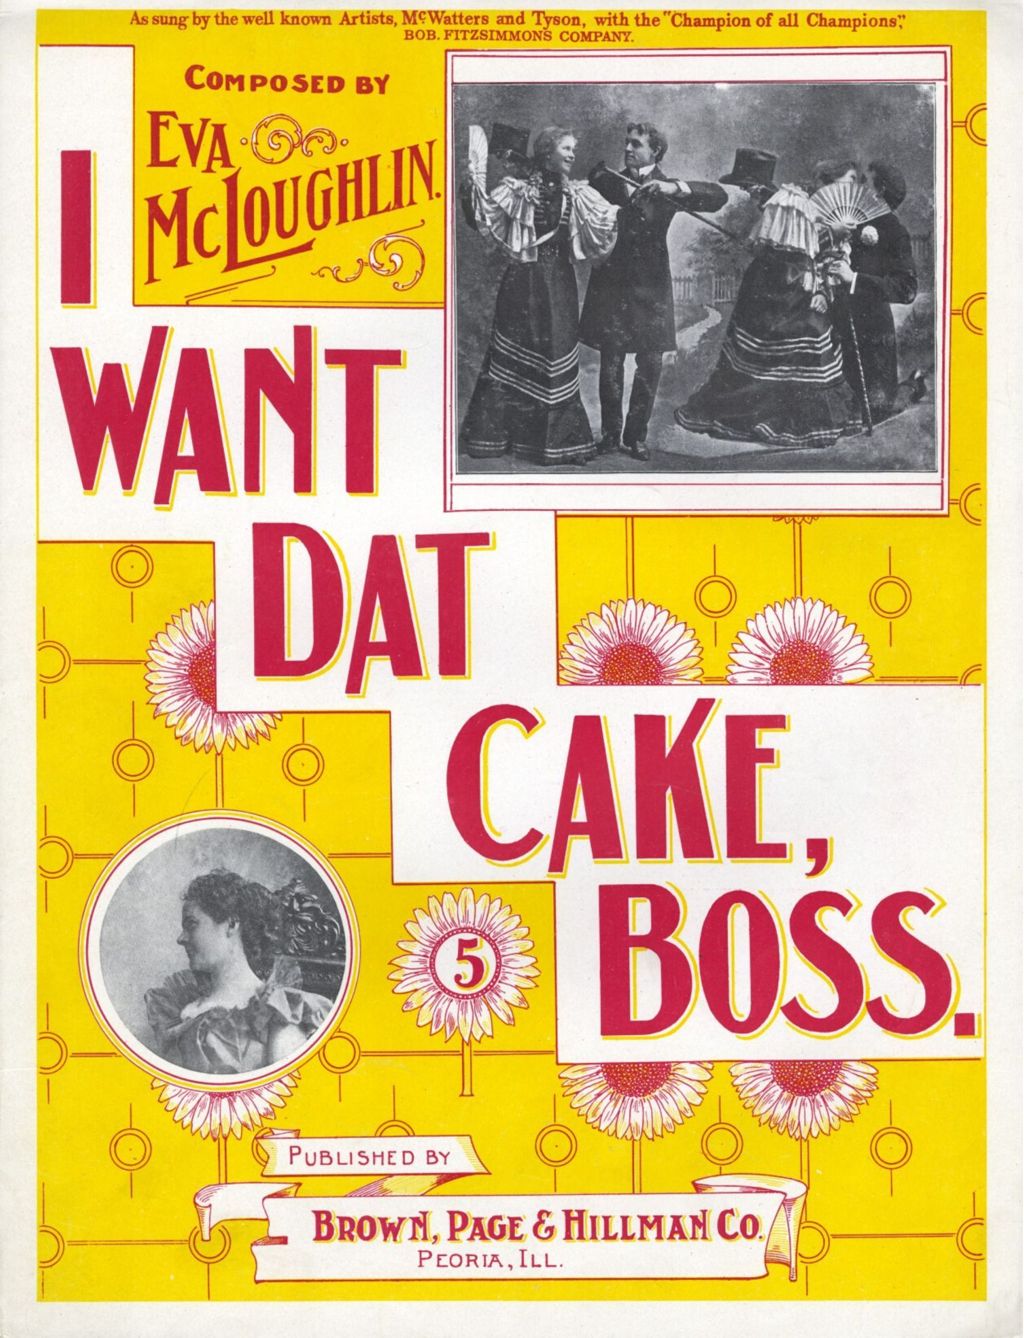 I Want Dat Cake, Boss